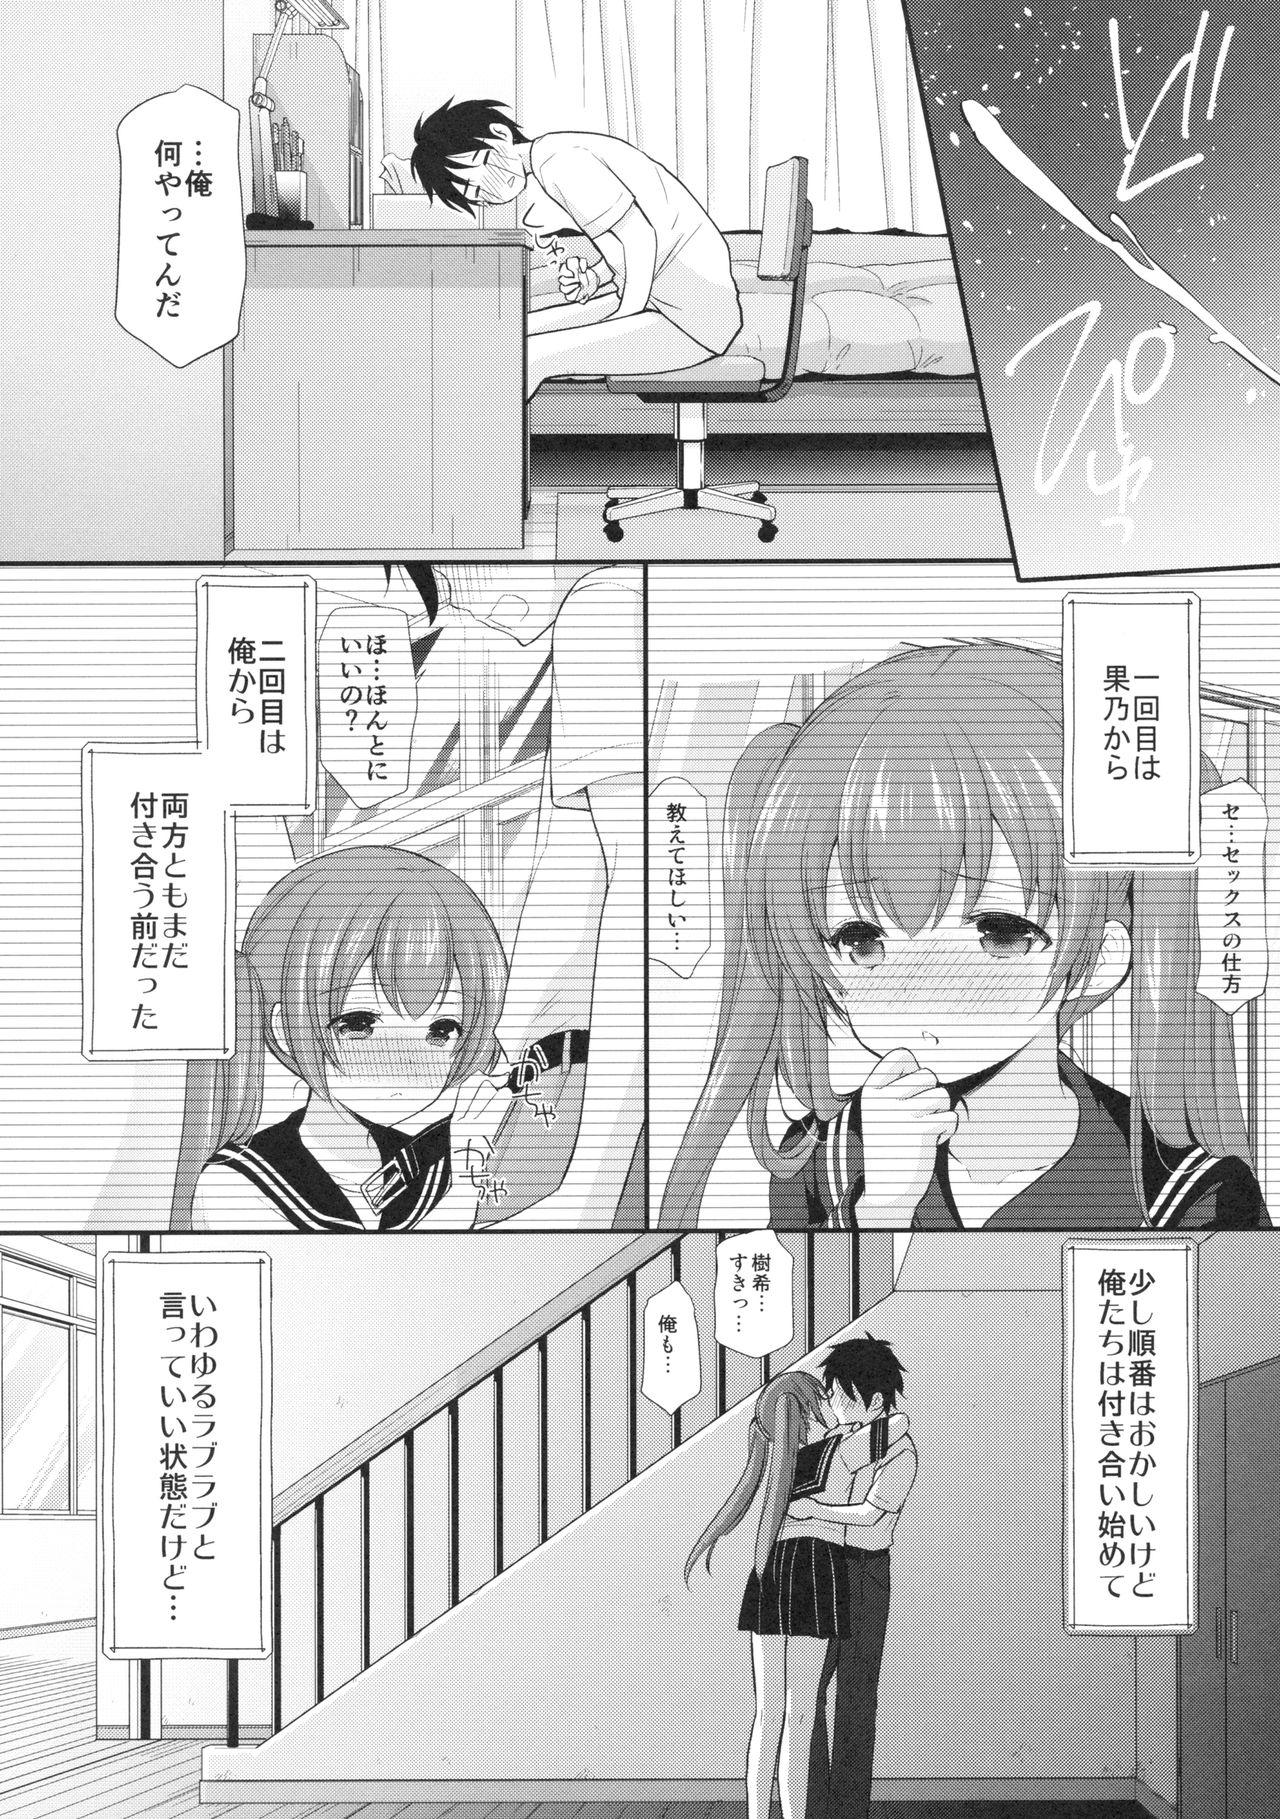 Pussy Eating Tsukiatte Mitara Kanojo ga Totemo... datta - Original Self - Page 5